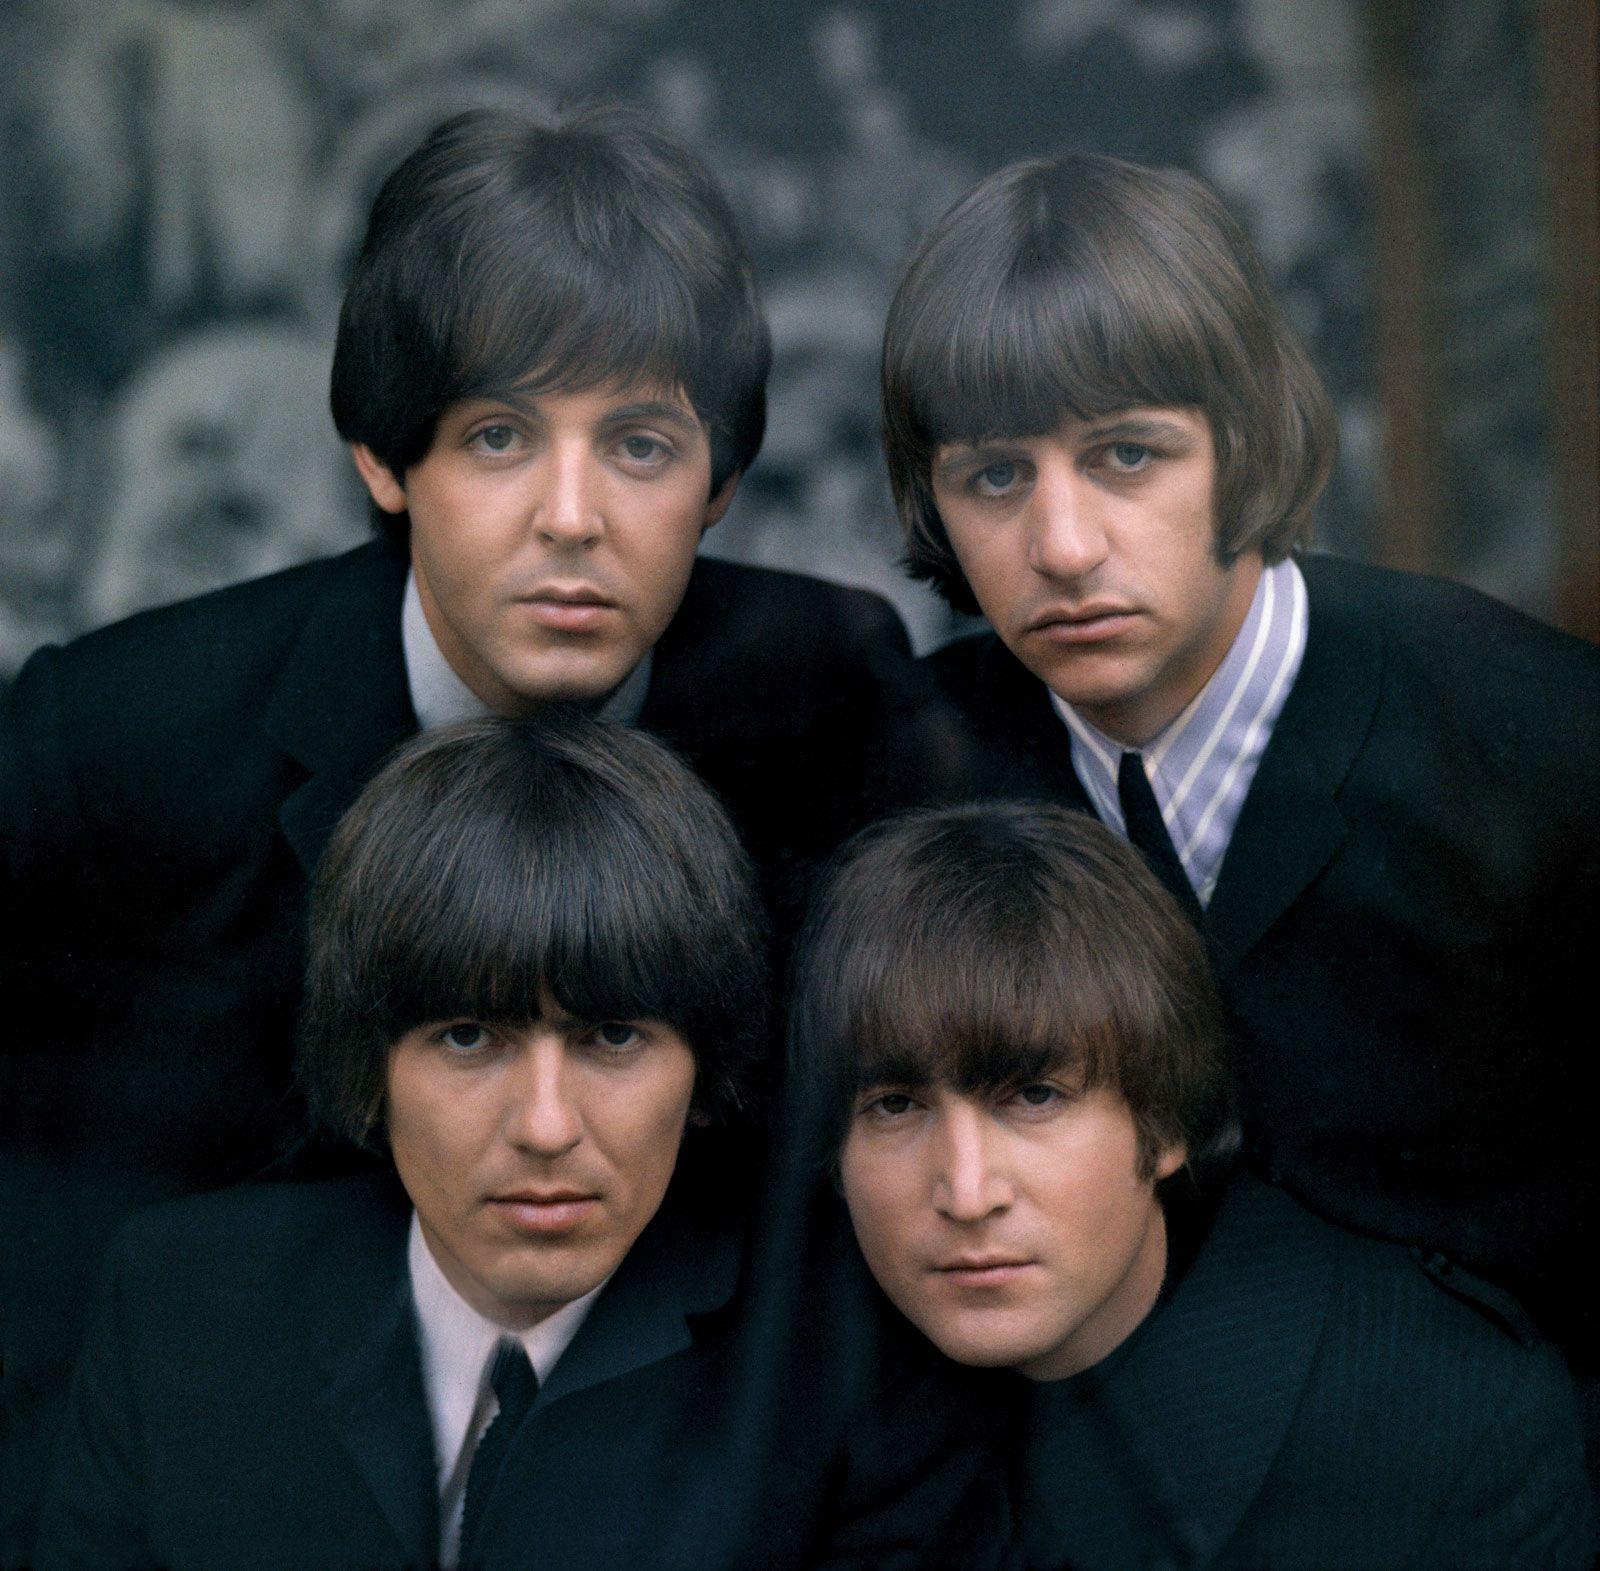 Beatles | Members, Songs, Albums, & Facts | Britannica